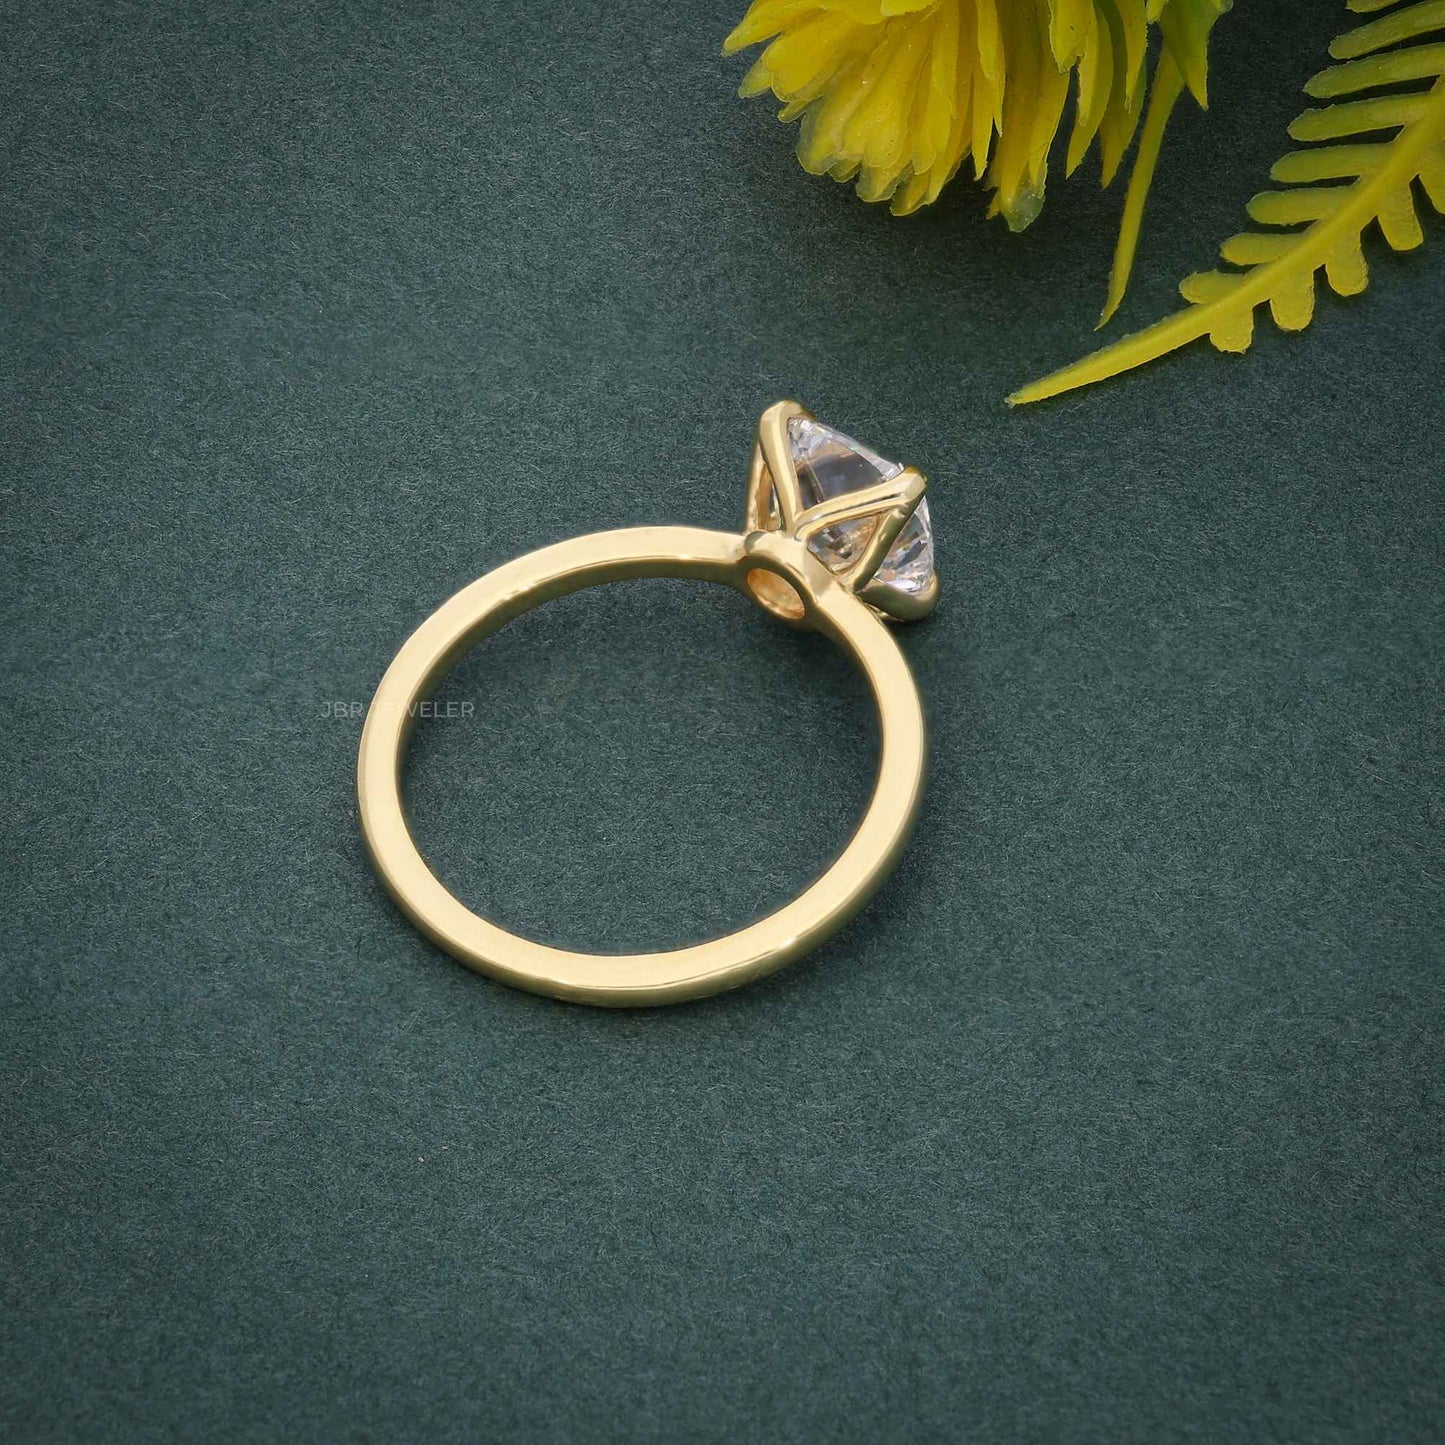 Petal Cushion Moissanite Diamond Engagement Ring